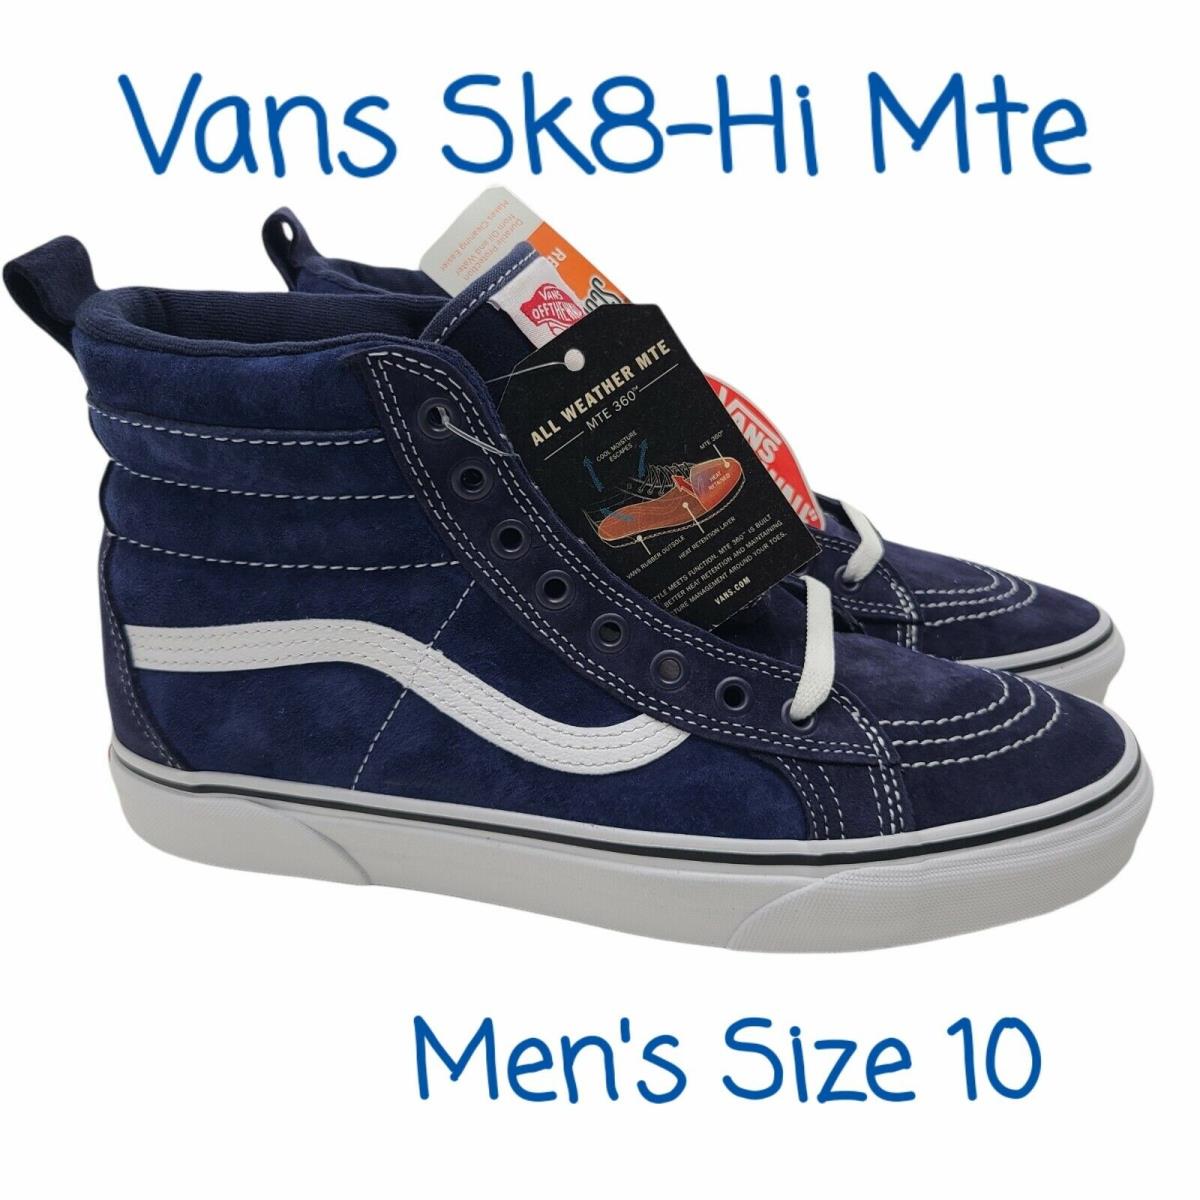 Vans Sk8 Hi Mte Mens US Size 10 Sneaker Shoe Navy Blue White